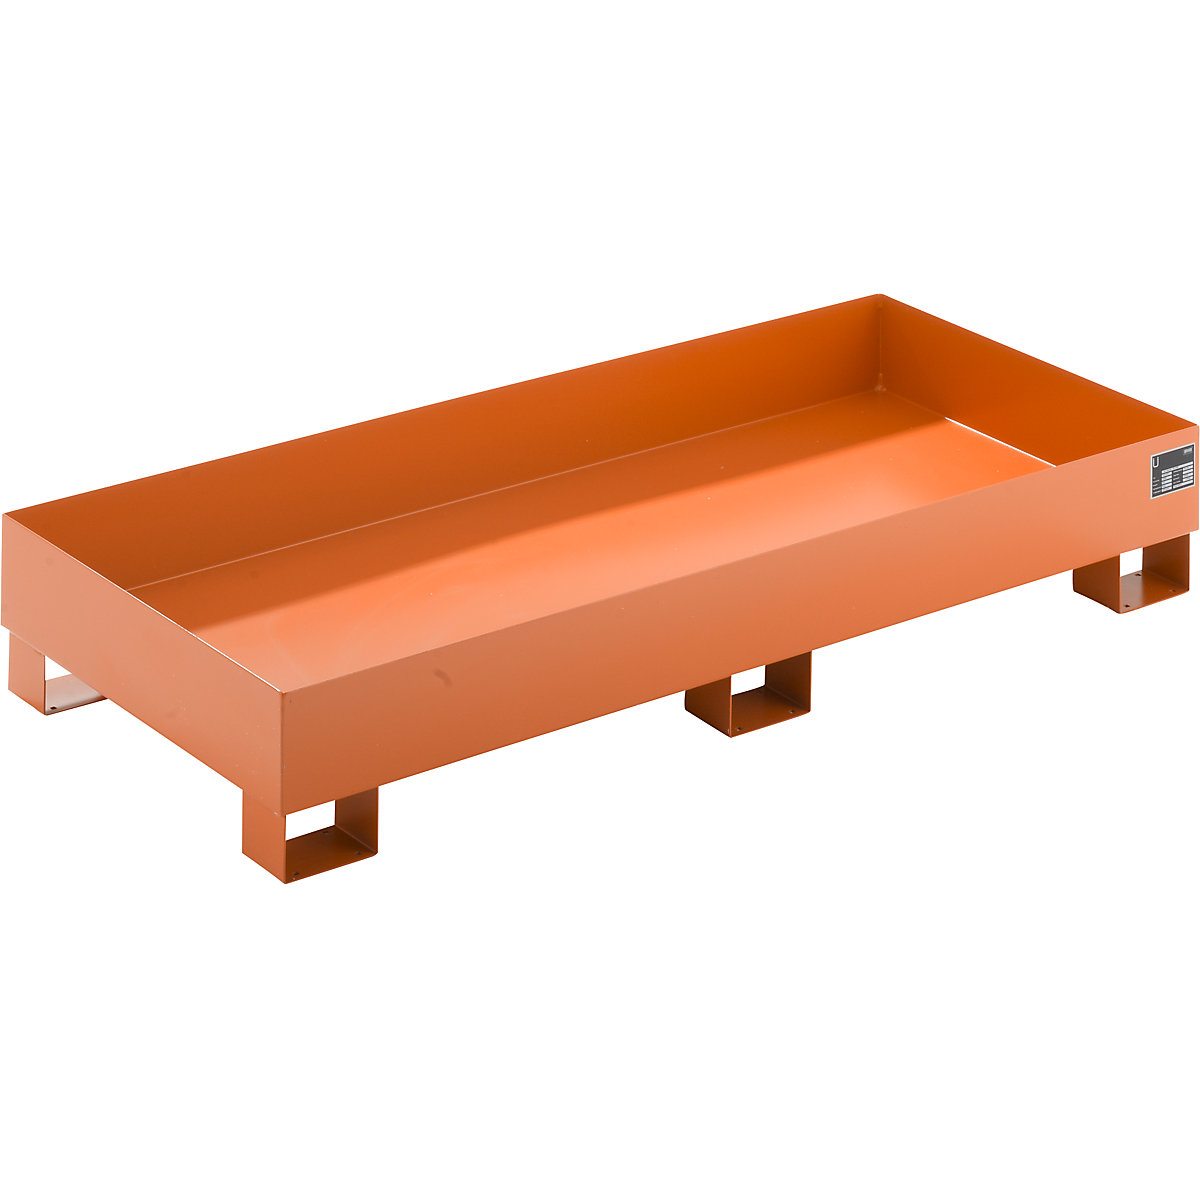 EUROKRAFTbasic – Sump tray made from sheet steel, LxWxH 1800 x 800 x 275 mm, orange RAL 2000